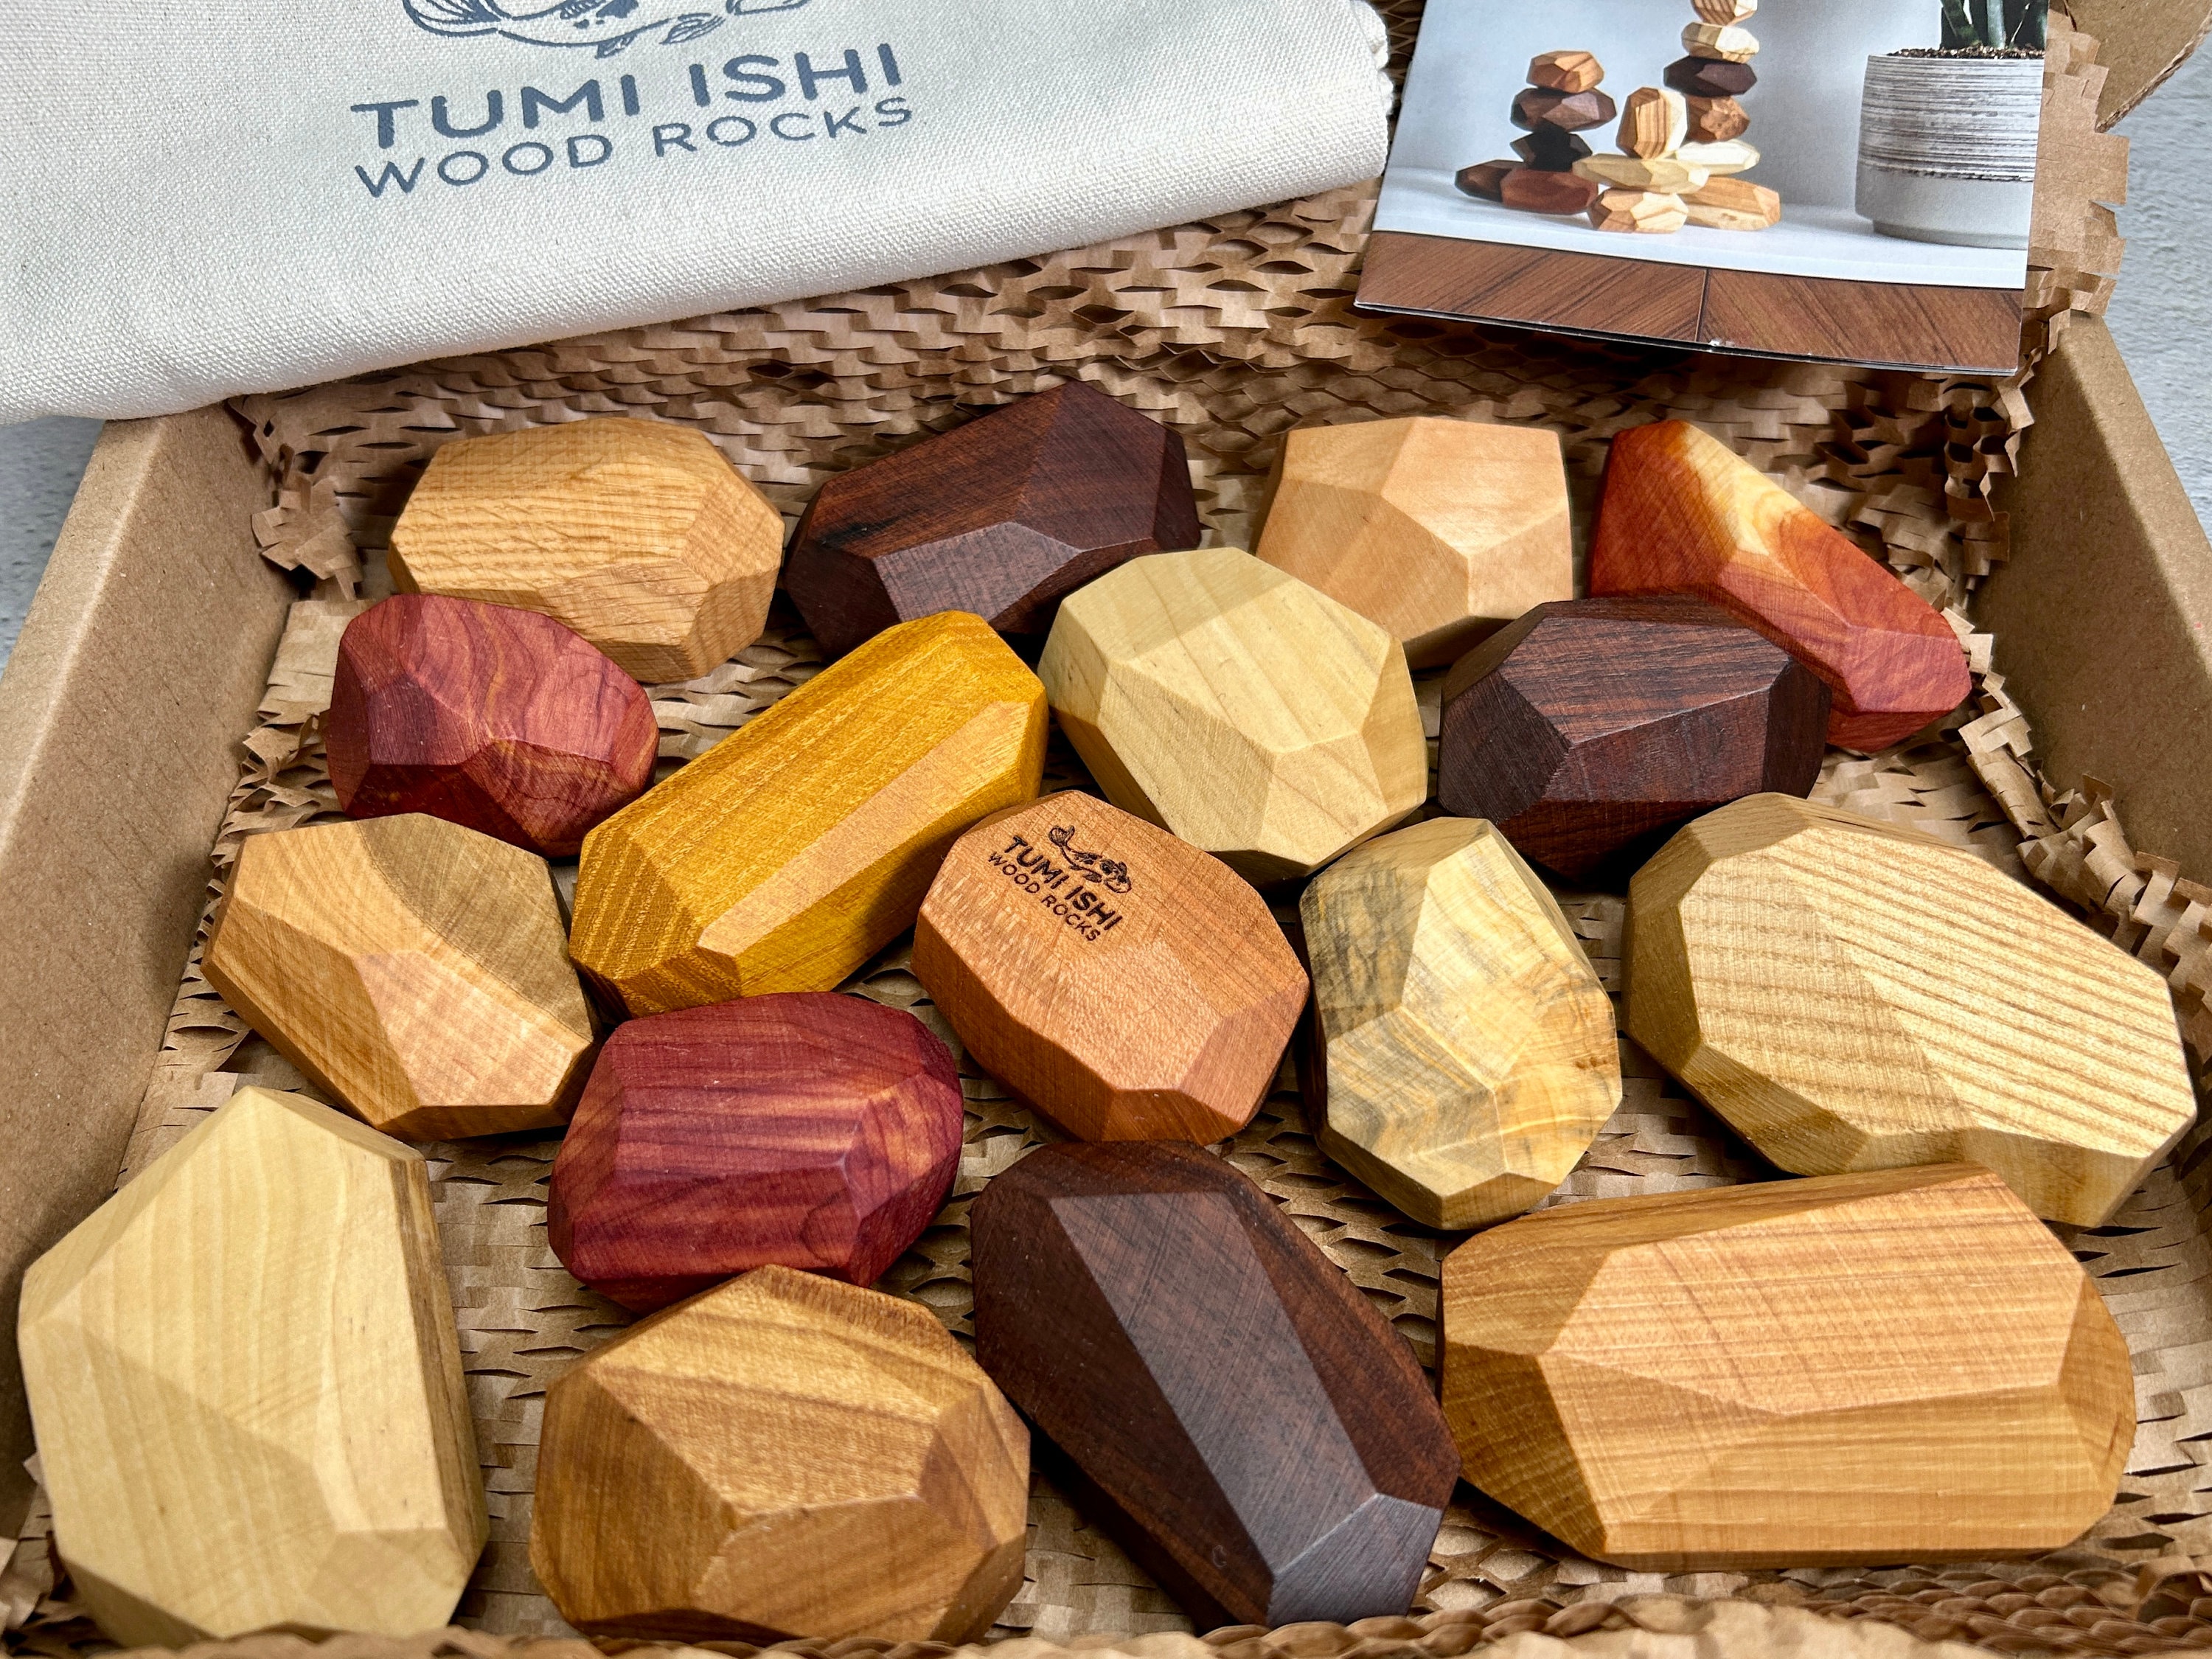 Tumi-Isi Wooden Stacking Rocks (hardwood mix)